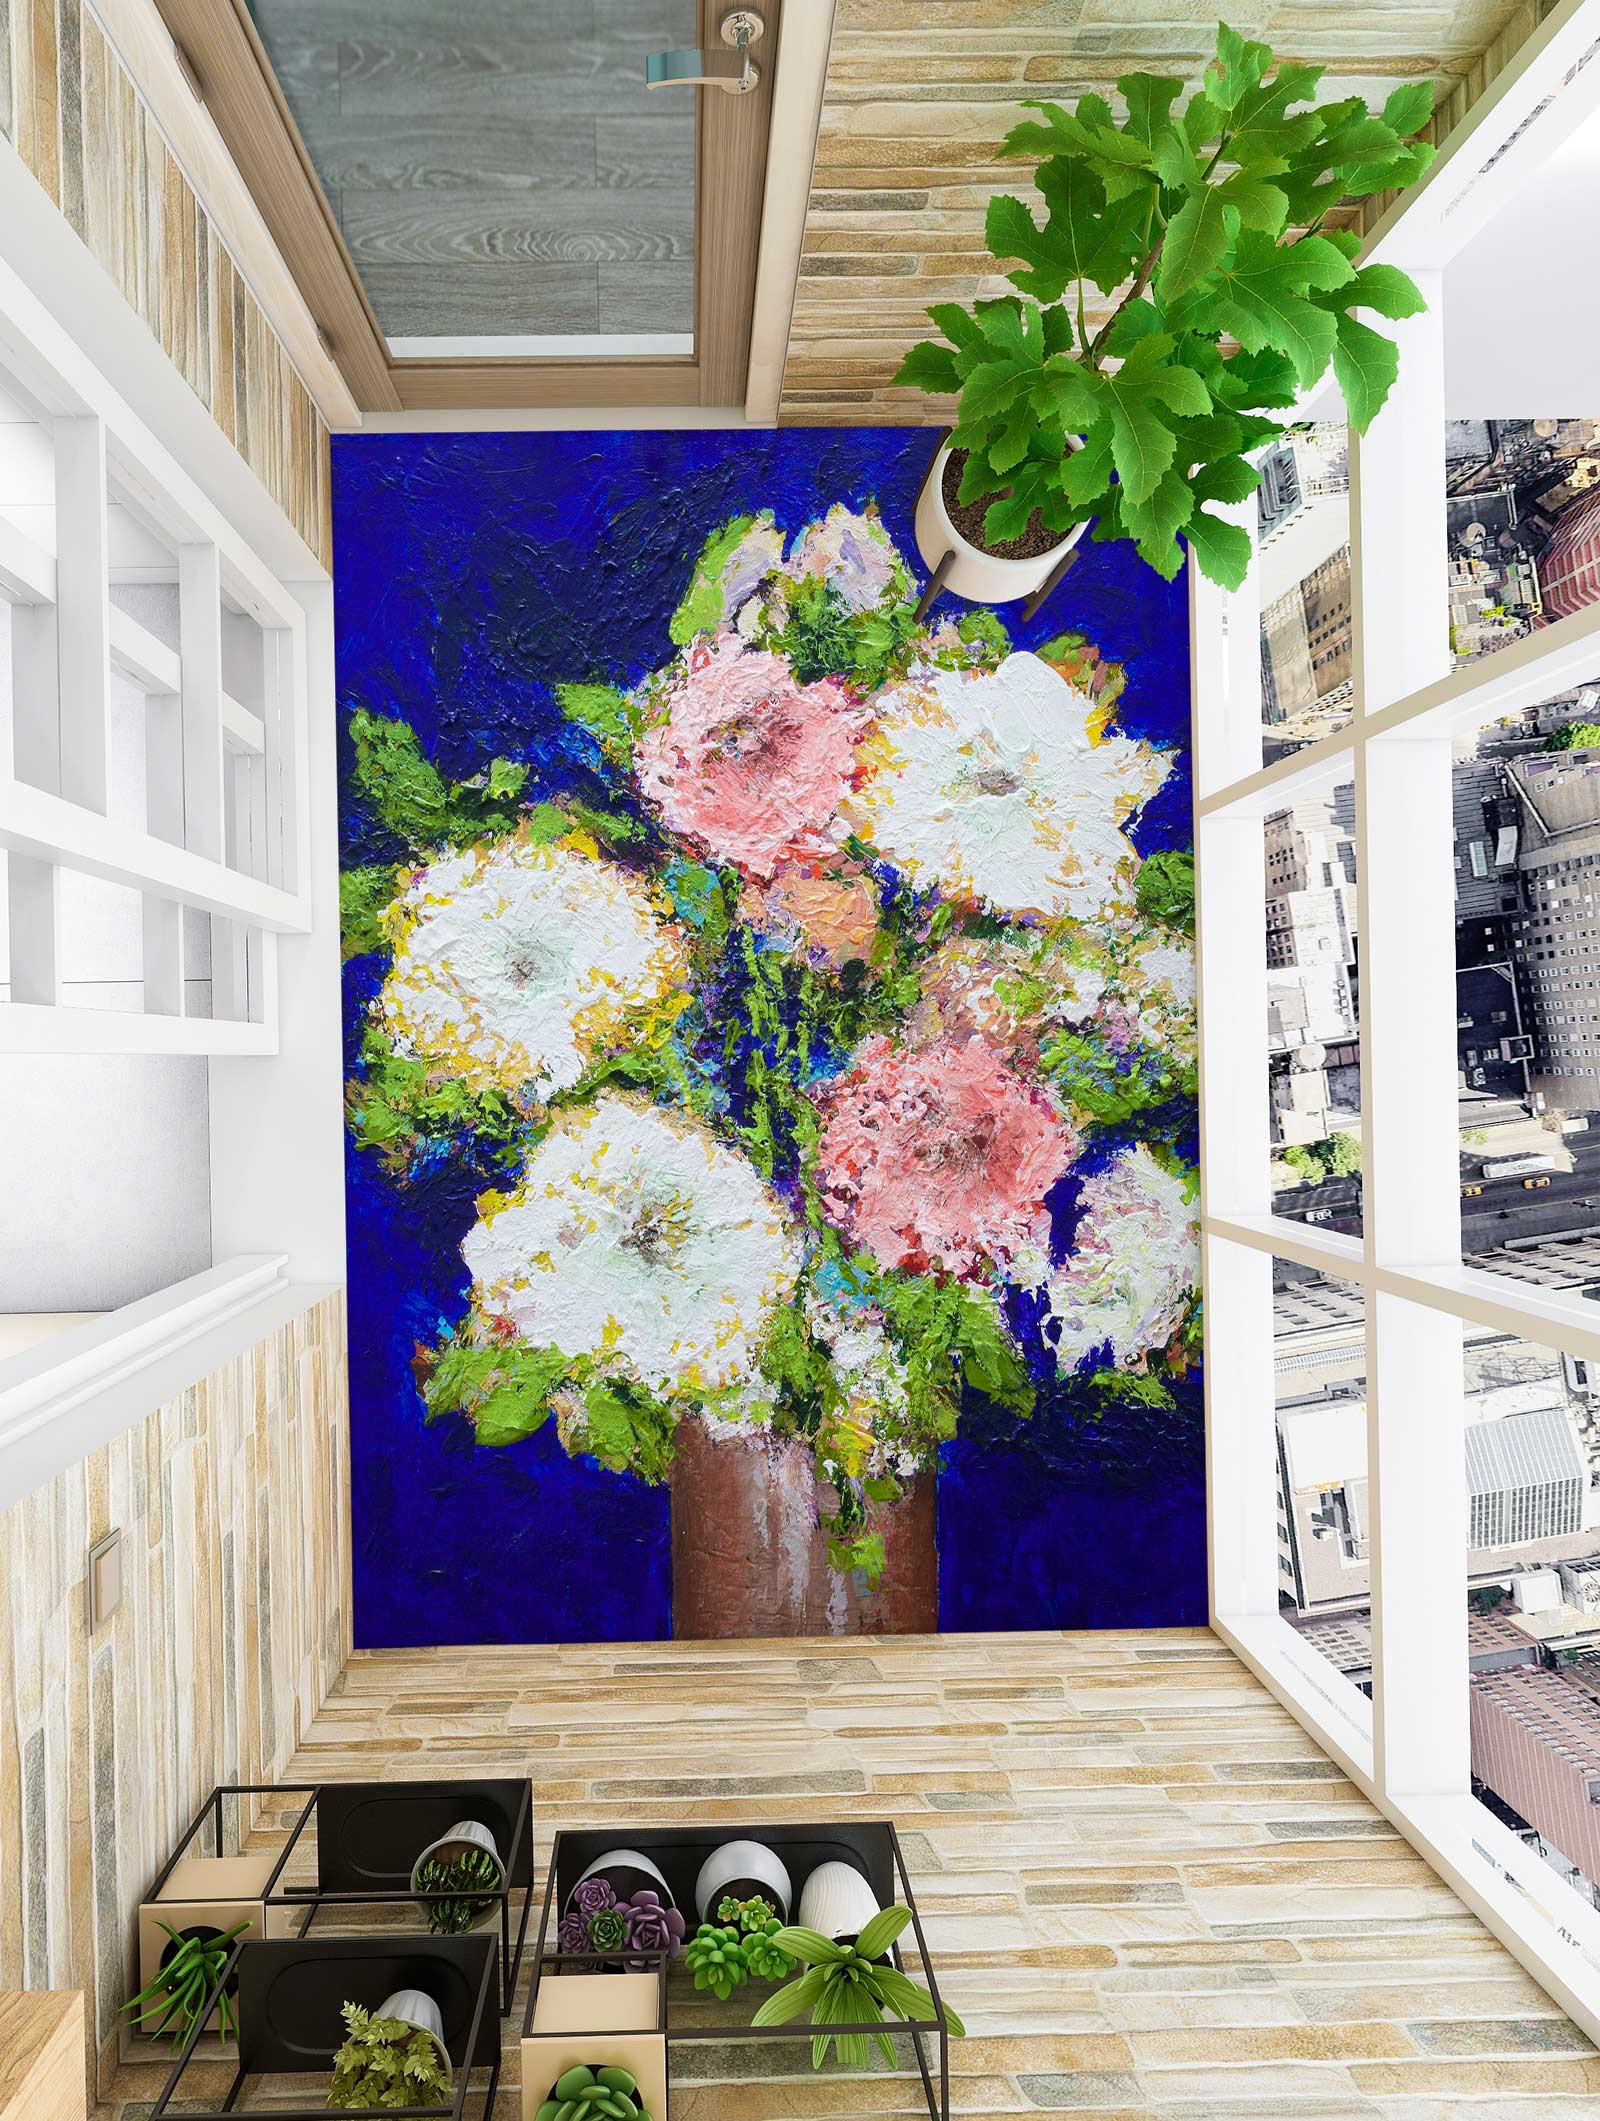 3D Flowers Vase Painting 9698 Allan P. Friedlander Floor Mural  Wallpaper Murals Self-Adhesive Removable Print Epoxy